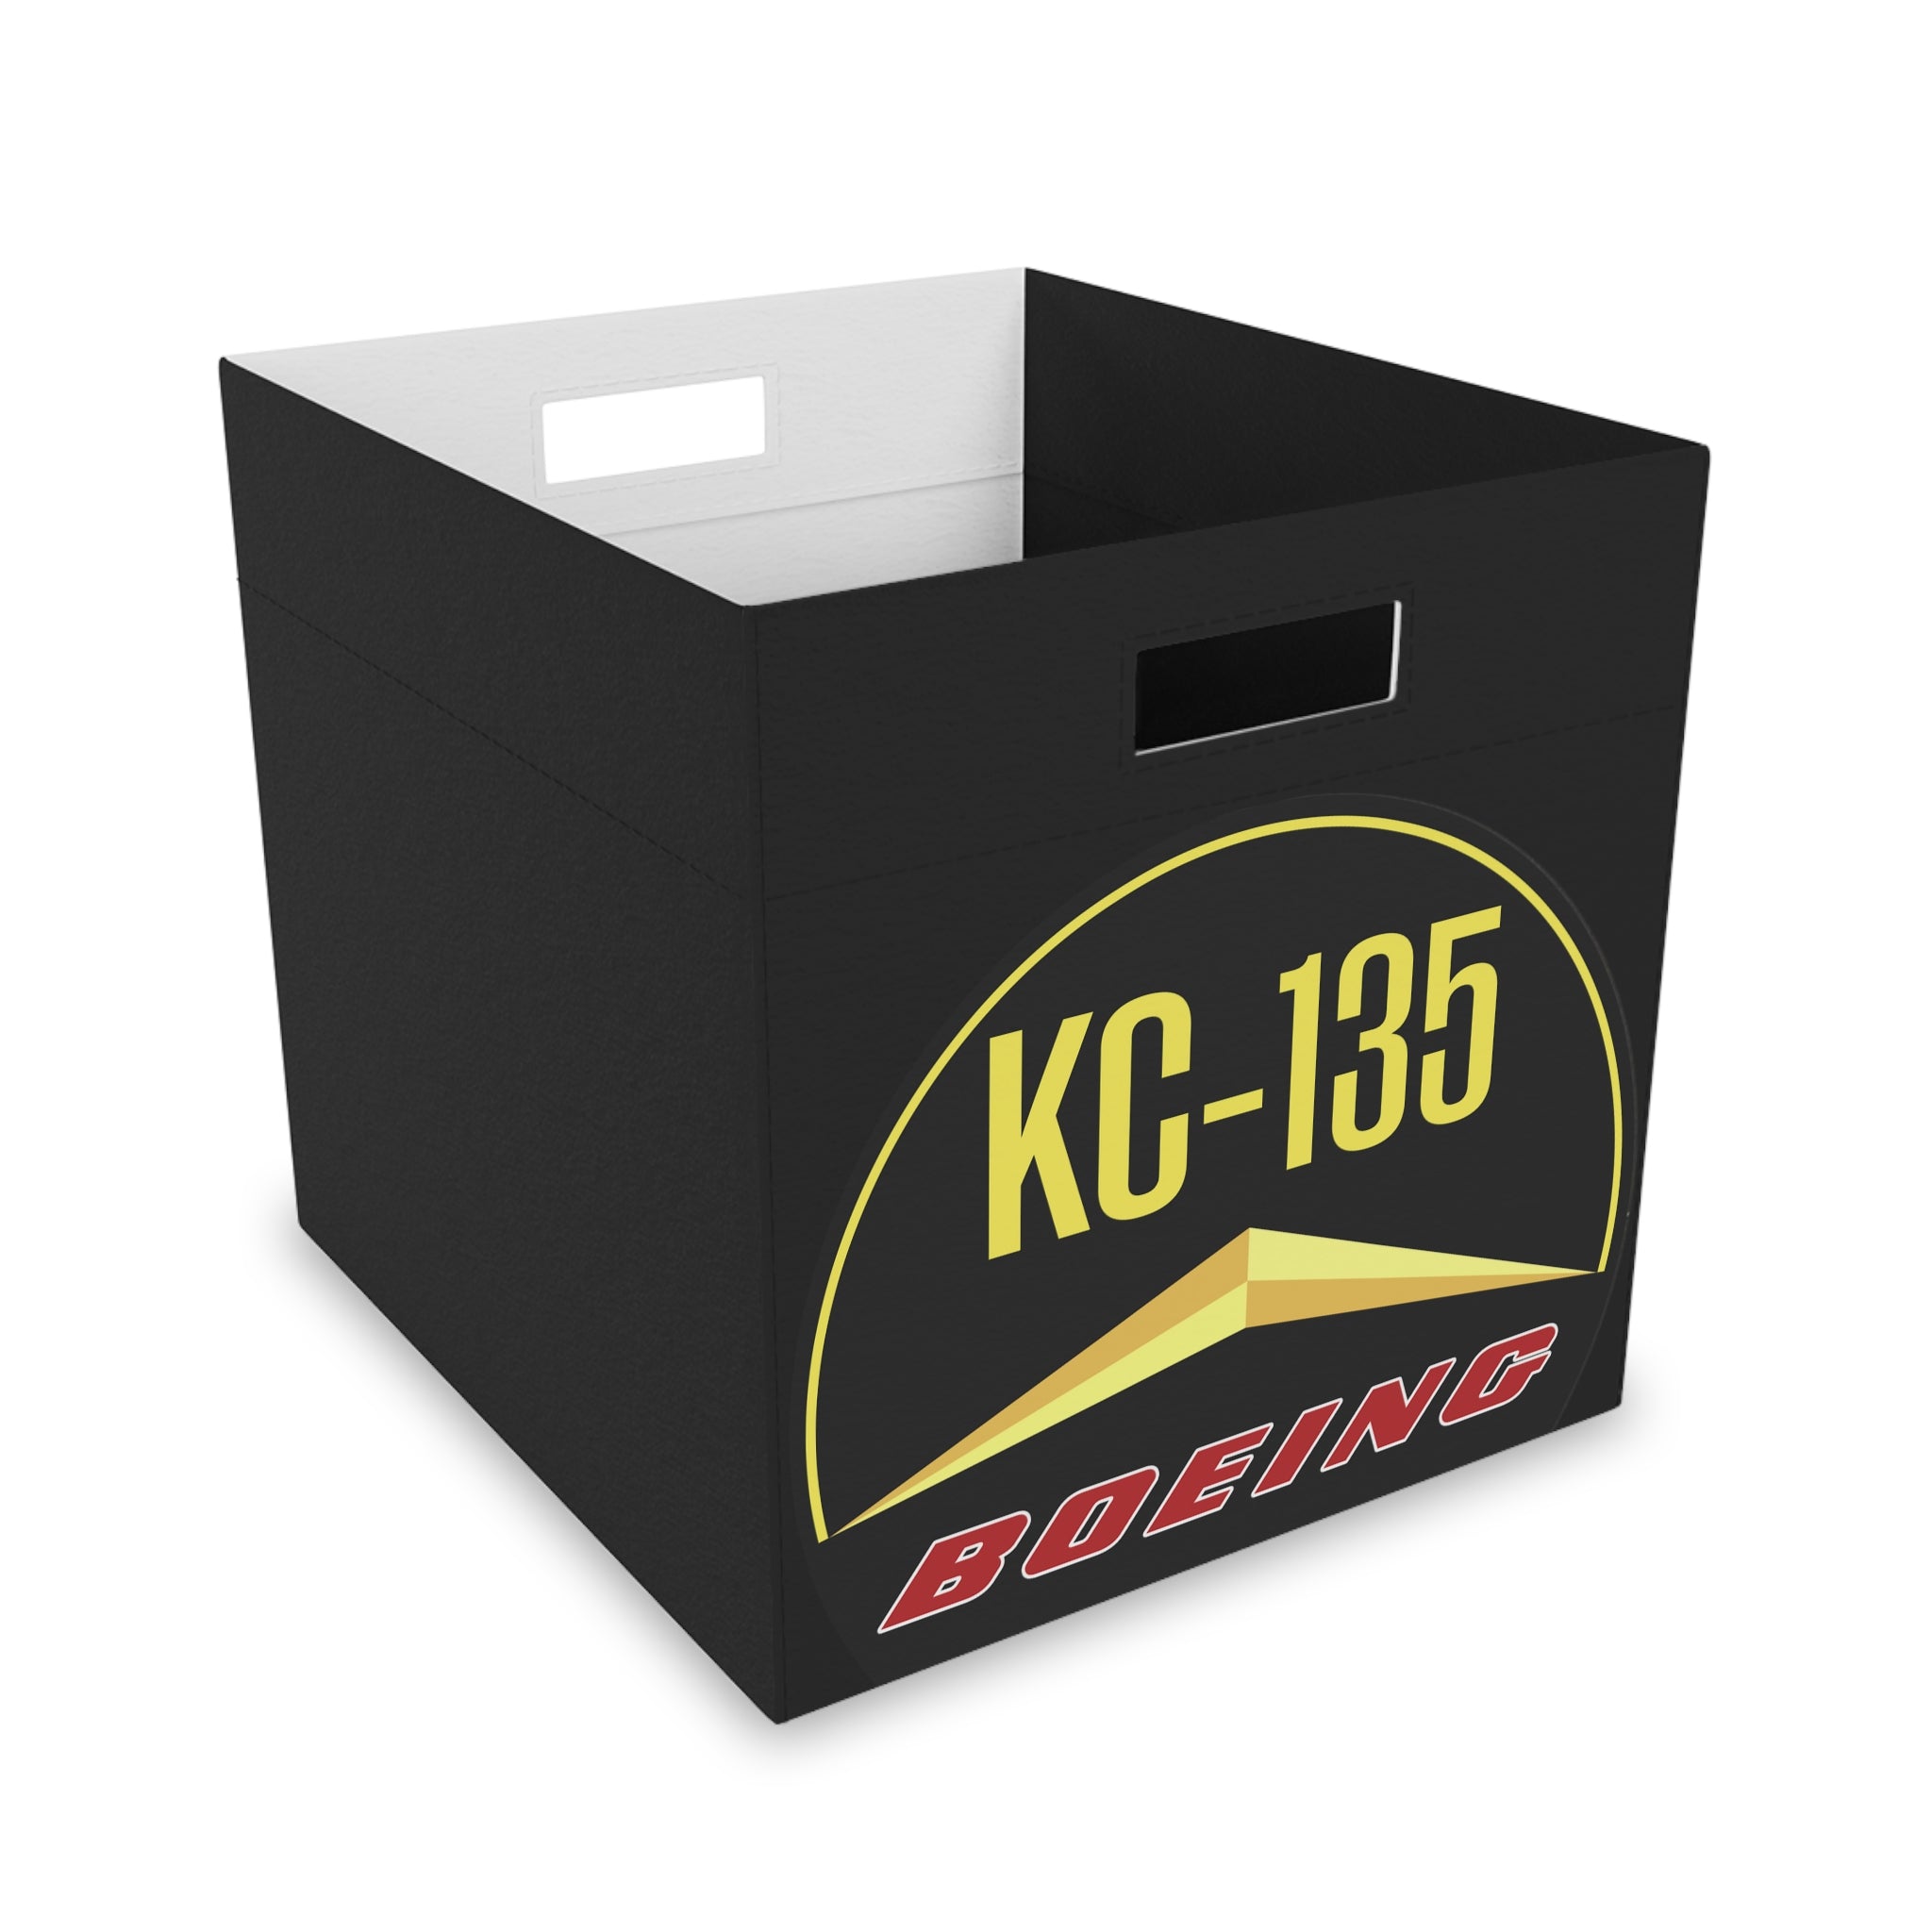 KC135 Inspired Felt Storage Box - I Love a Hangar